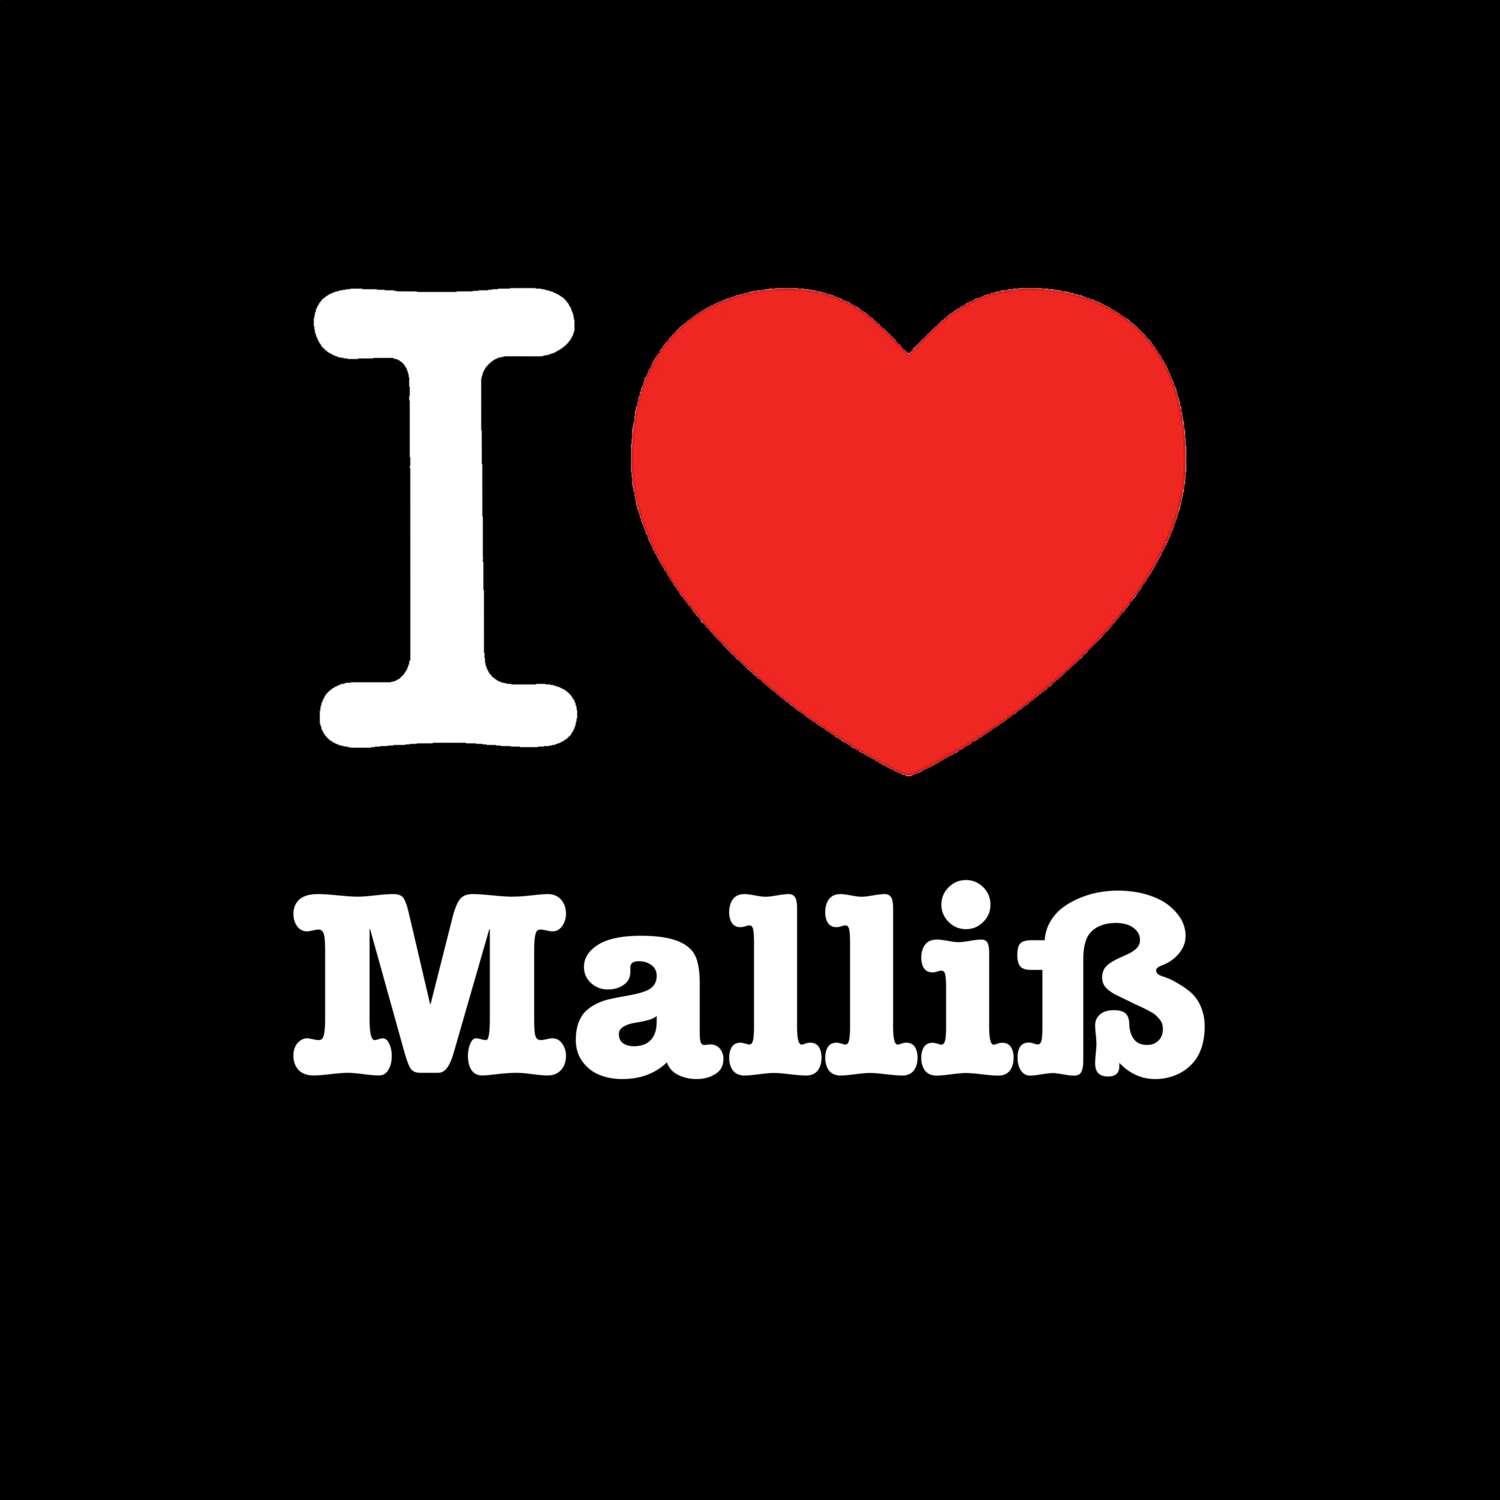 Malliß T-Shirt »I love«